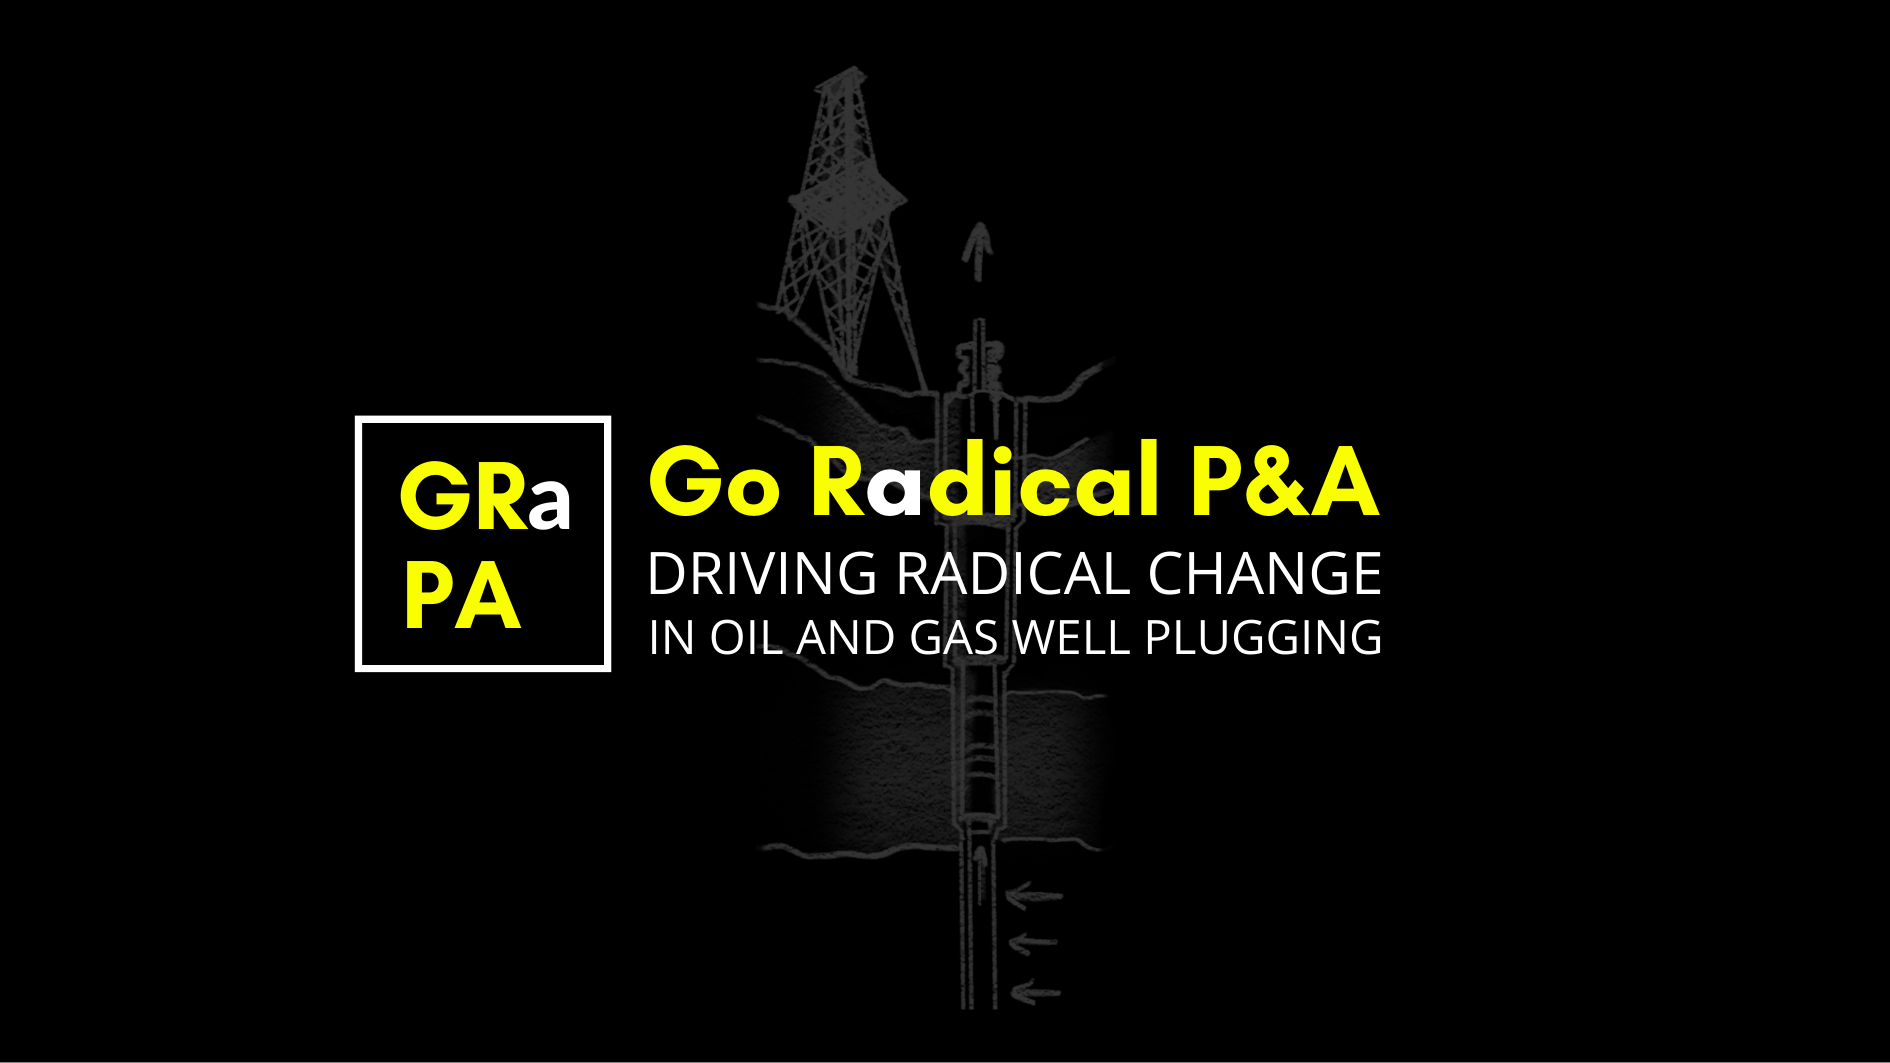 New strategic partnership with Go Radical P&A